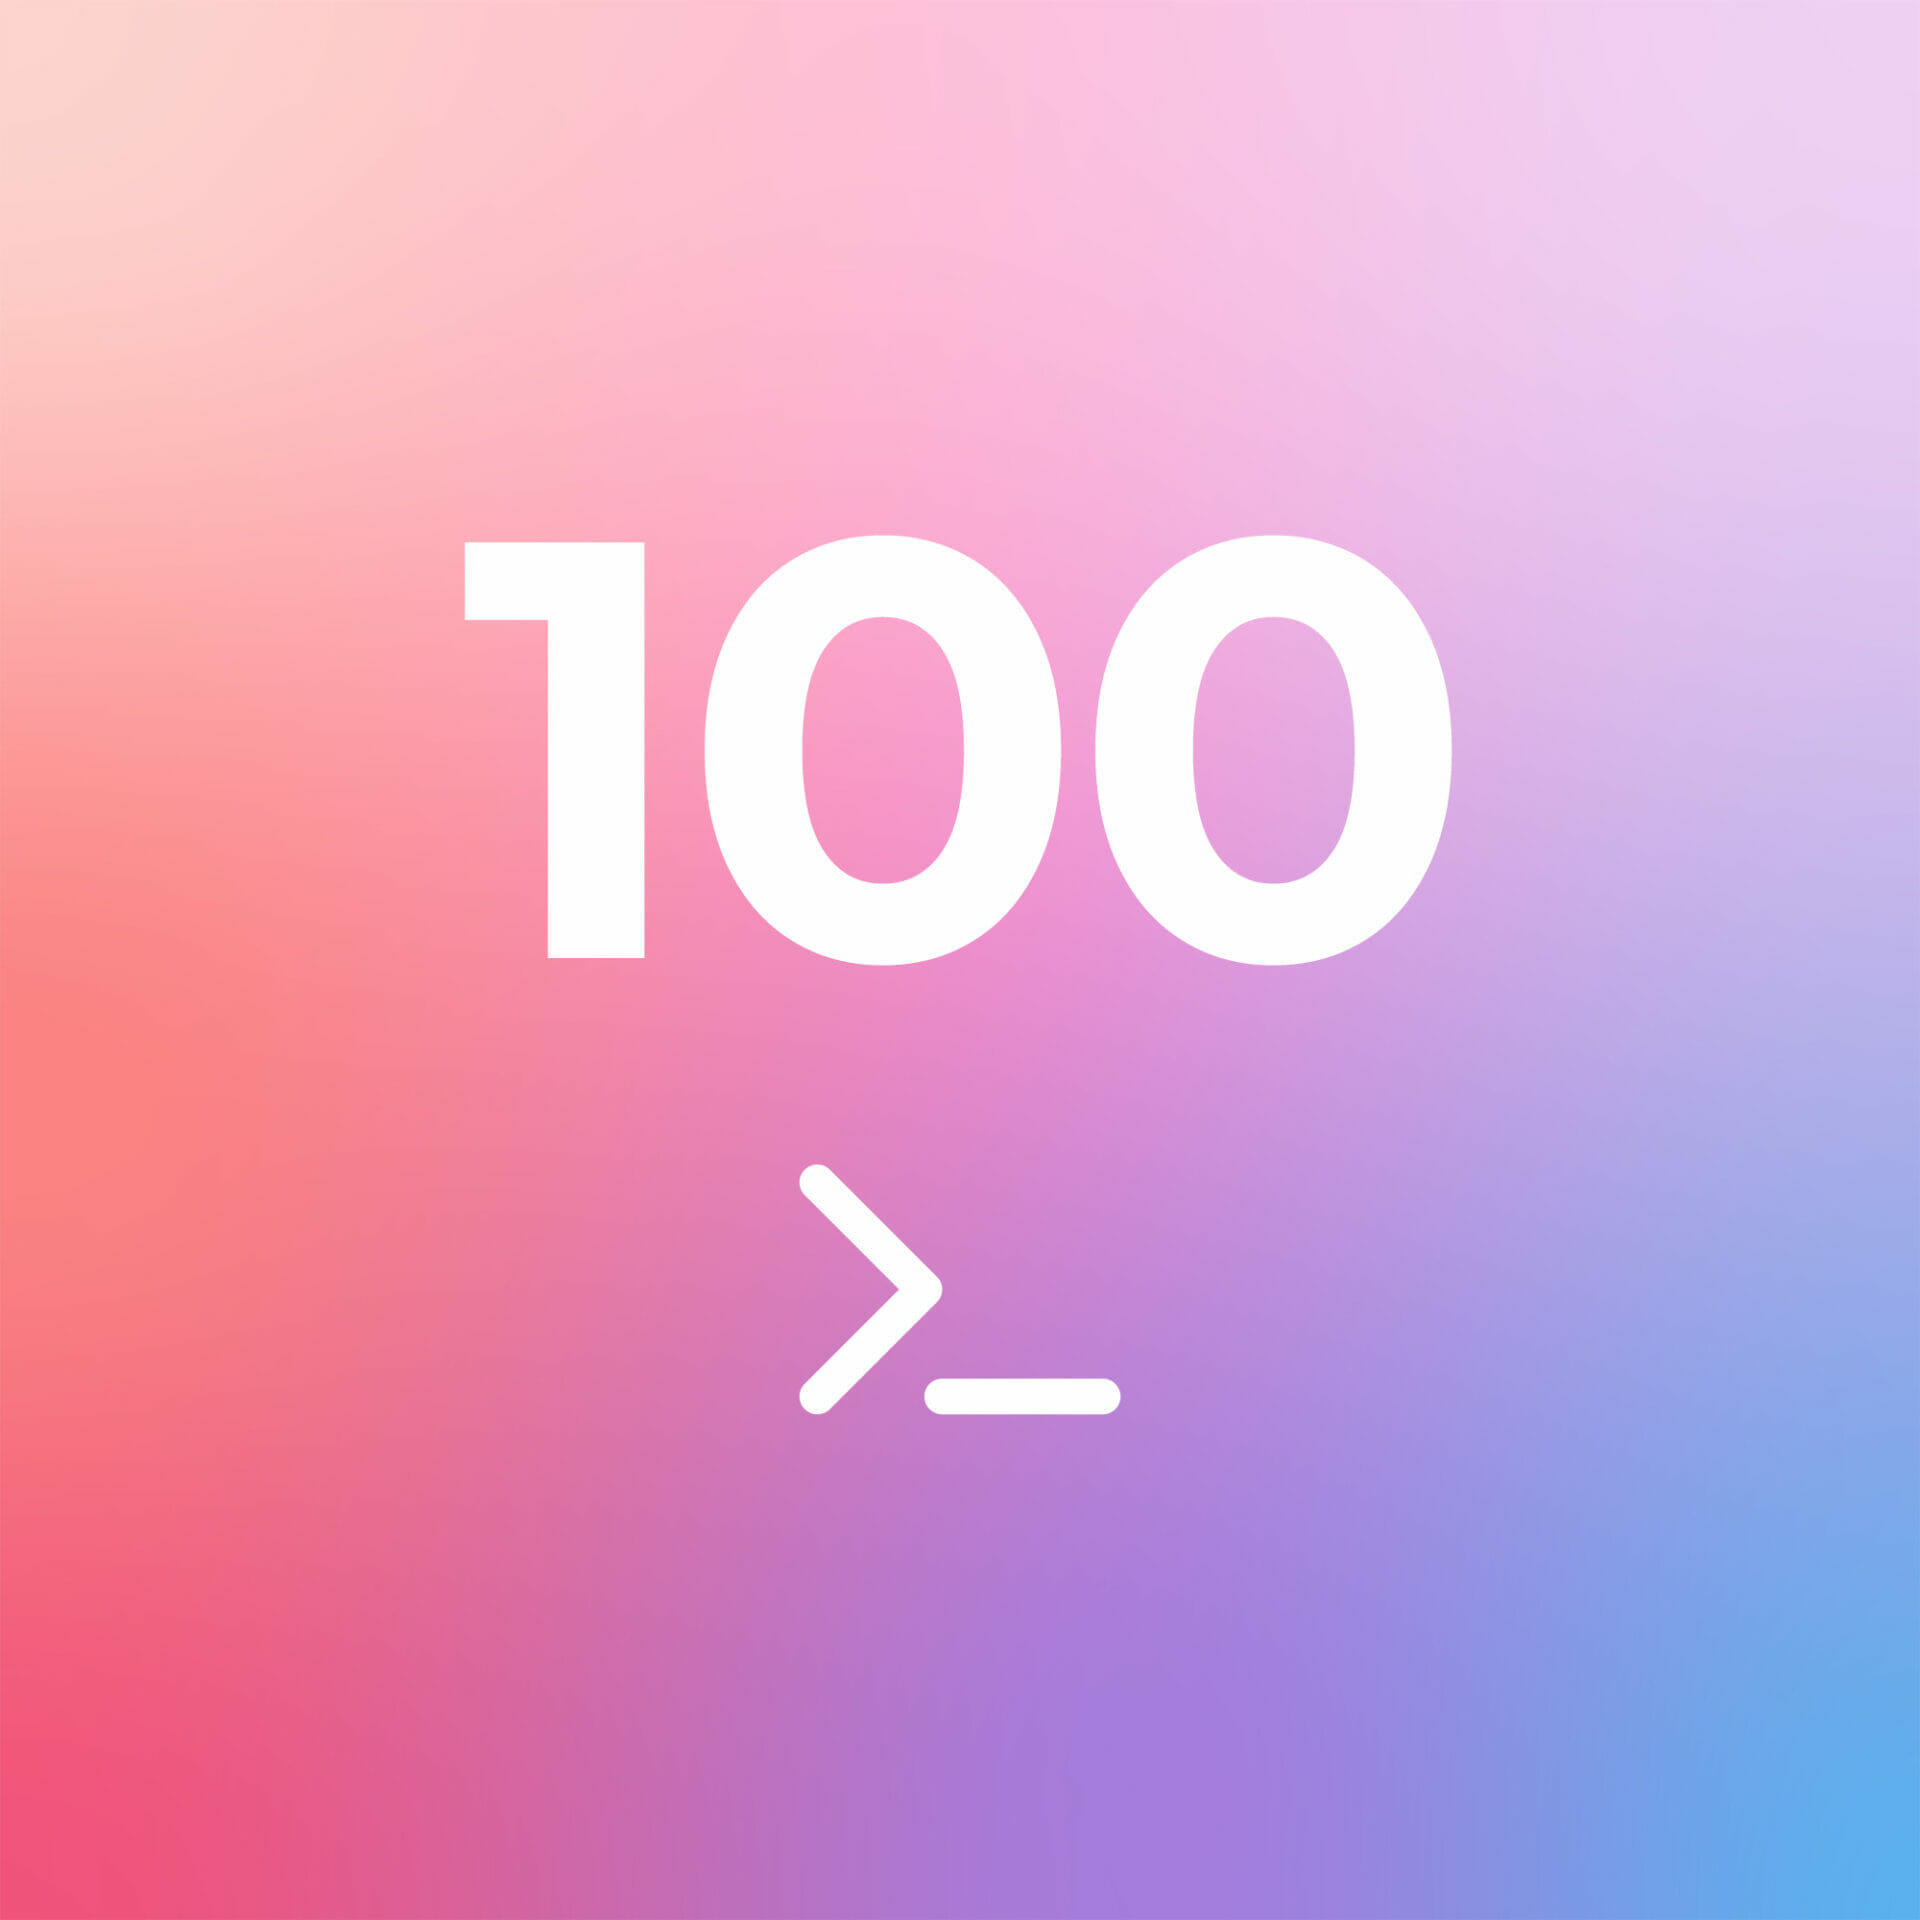 AI codes 100 prompts